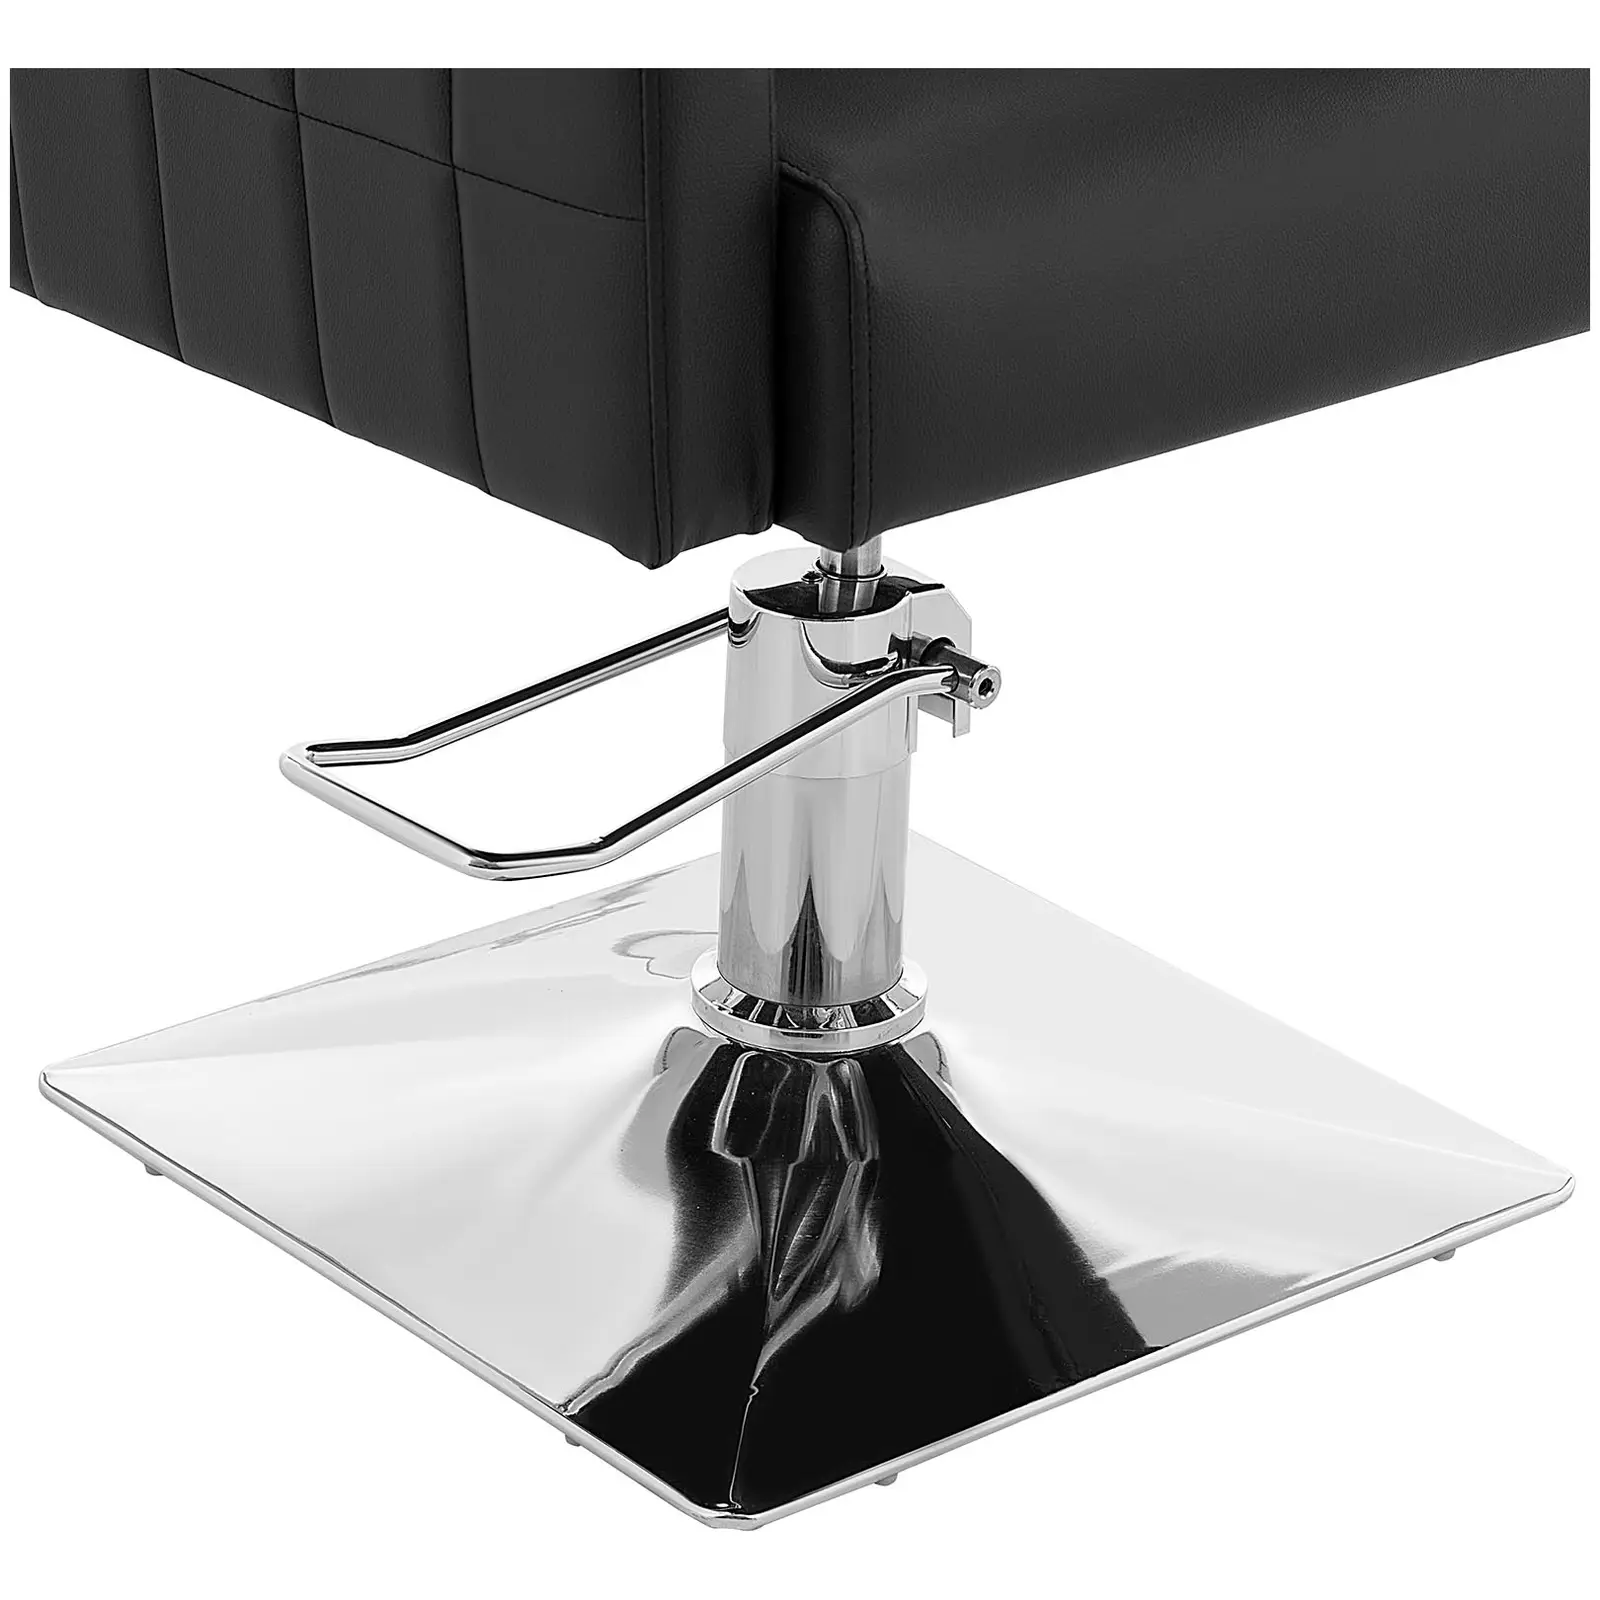 Salon Chair - 450 x 550 mm - 150 kg - Black